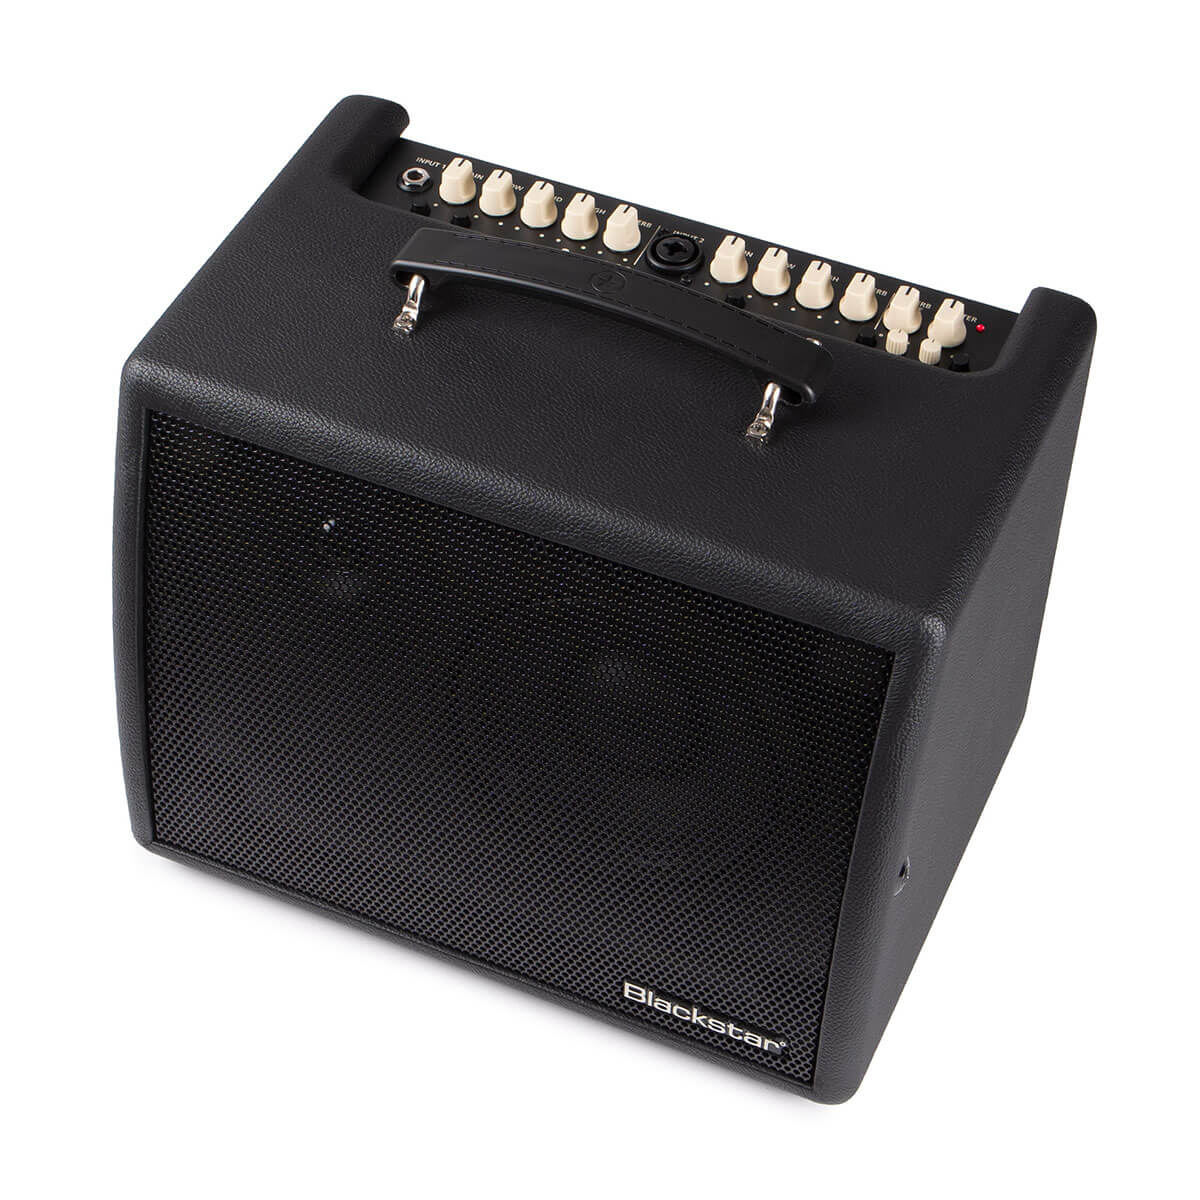 Blackstar Sonnet 60 watt Acoustic Amp - Black, View 3